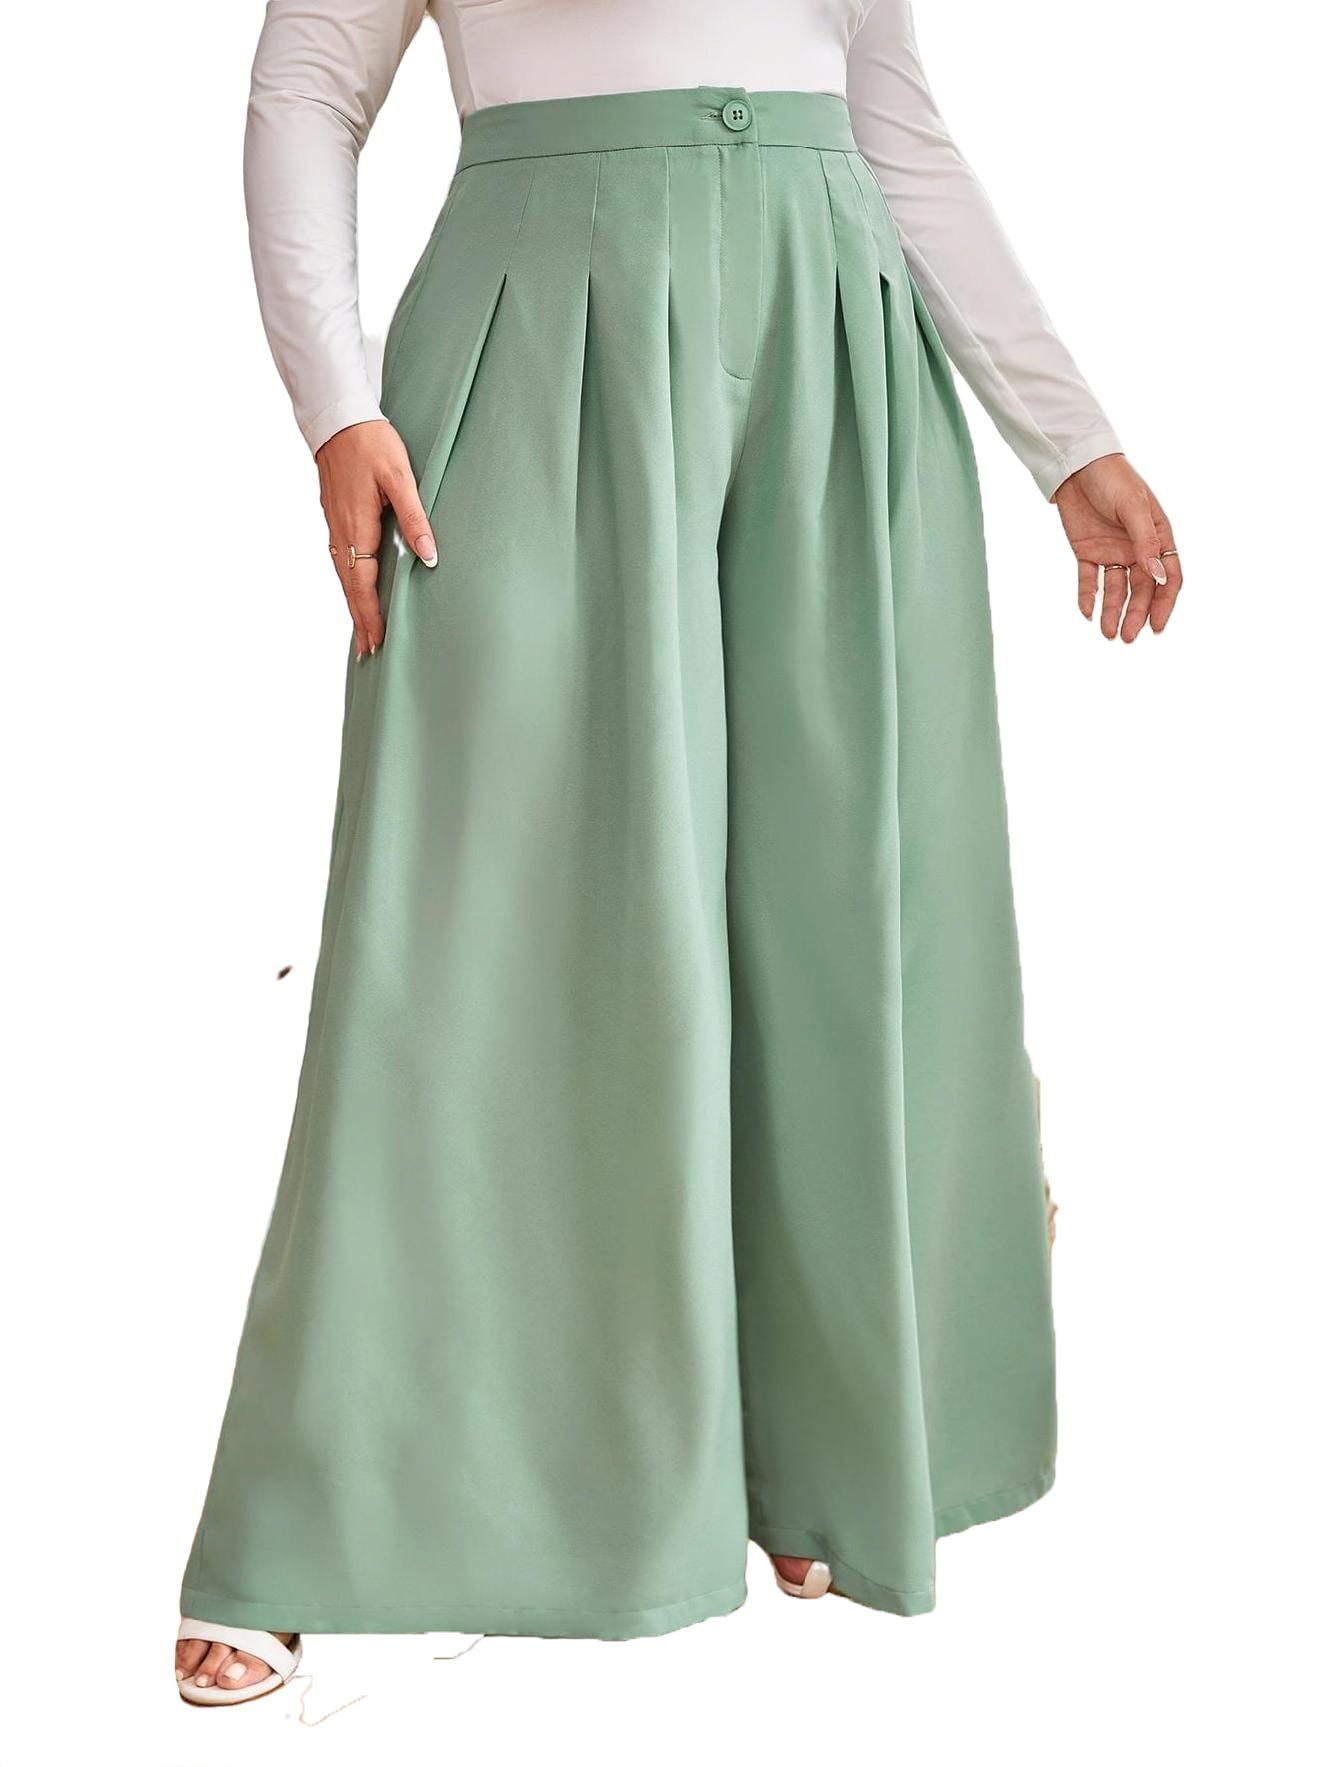 Elegant Solid Wide Leg Mint Green Plus Size Pants (Women's